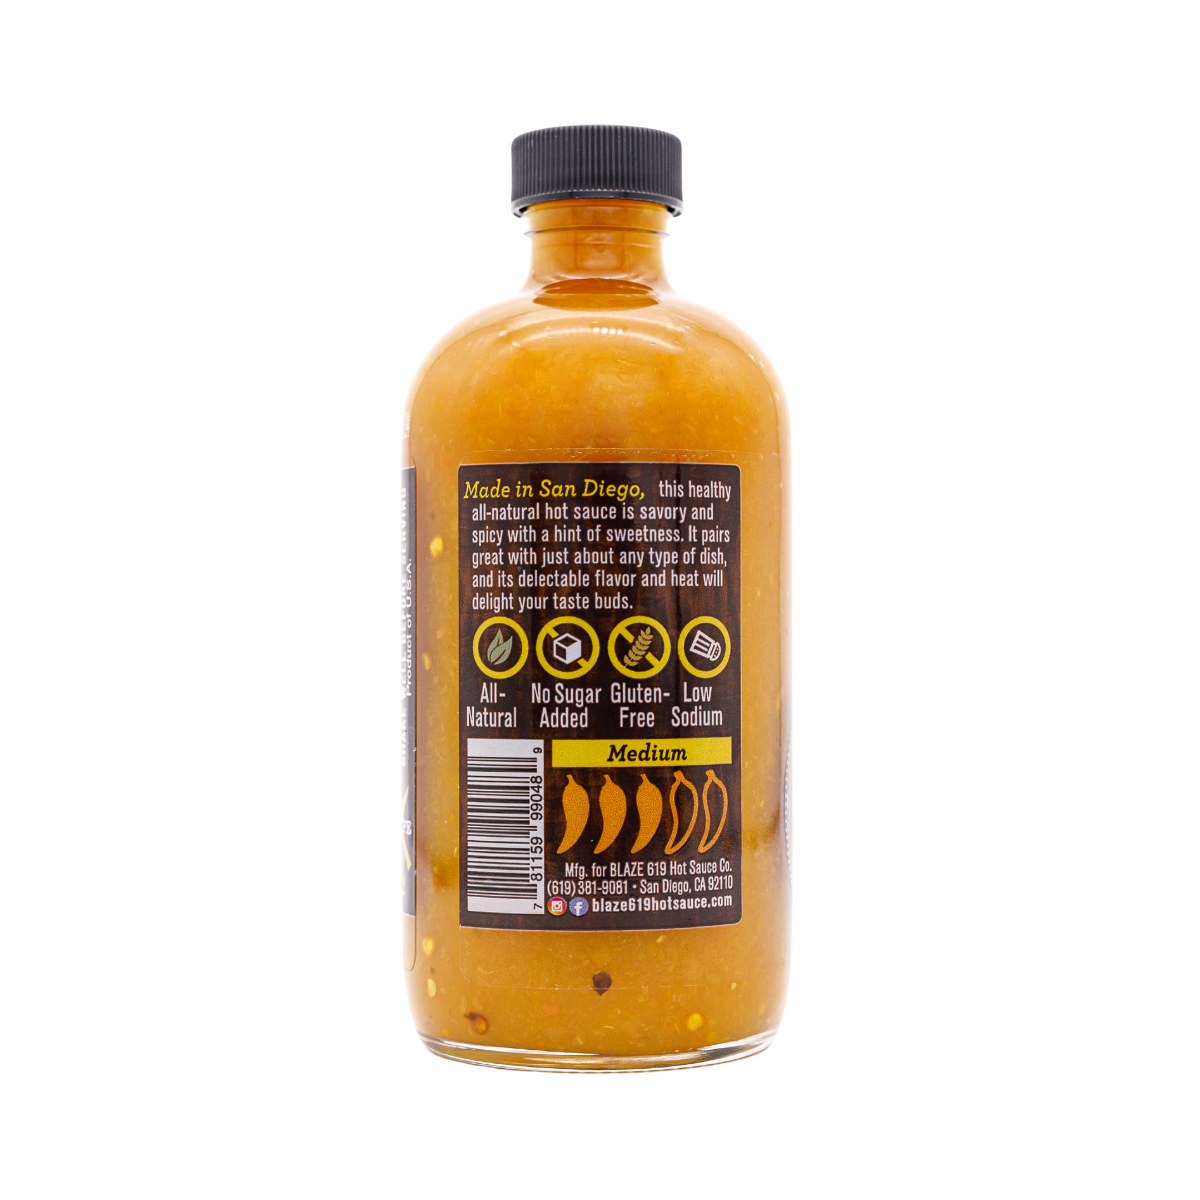 BLAZE 619 Pineapple Habanero Hot Sauce 8 oz - Medium